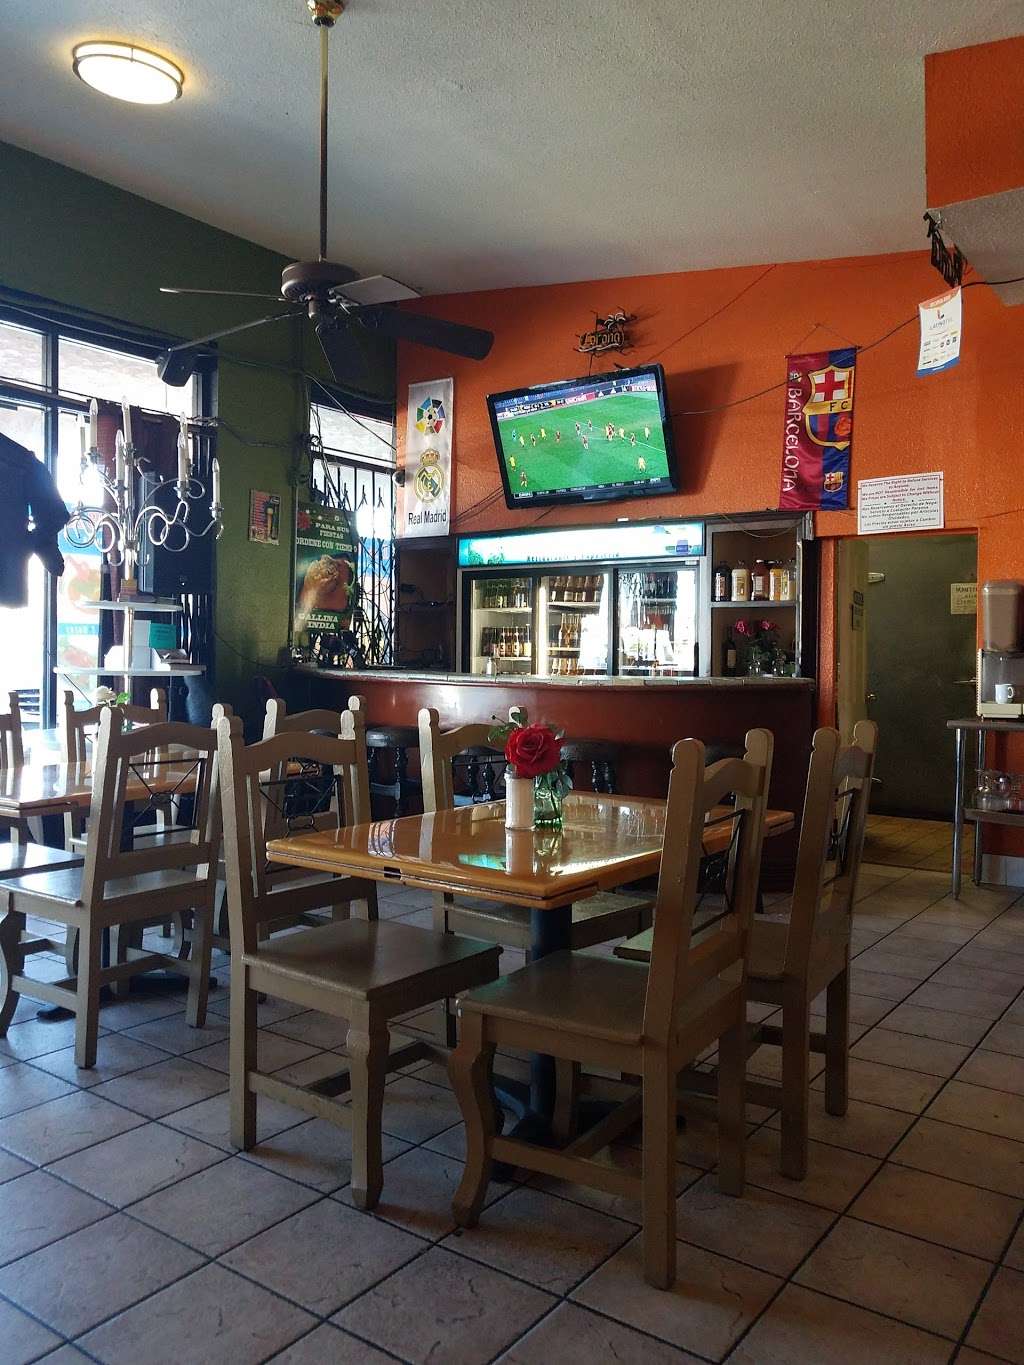 Restaurante Y Pupuseria La Ceiba | 4606 E Alondra Blvd, Compton, CA 90221 | Phone: (310) 885-3214